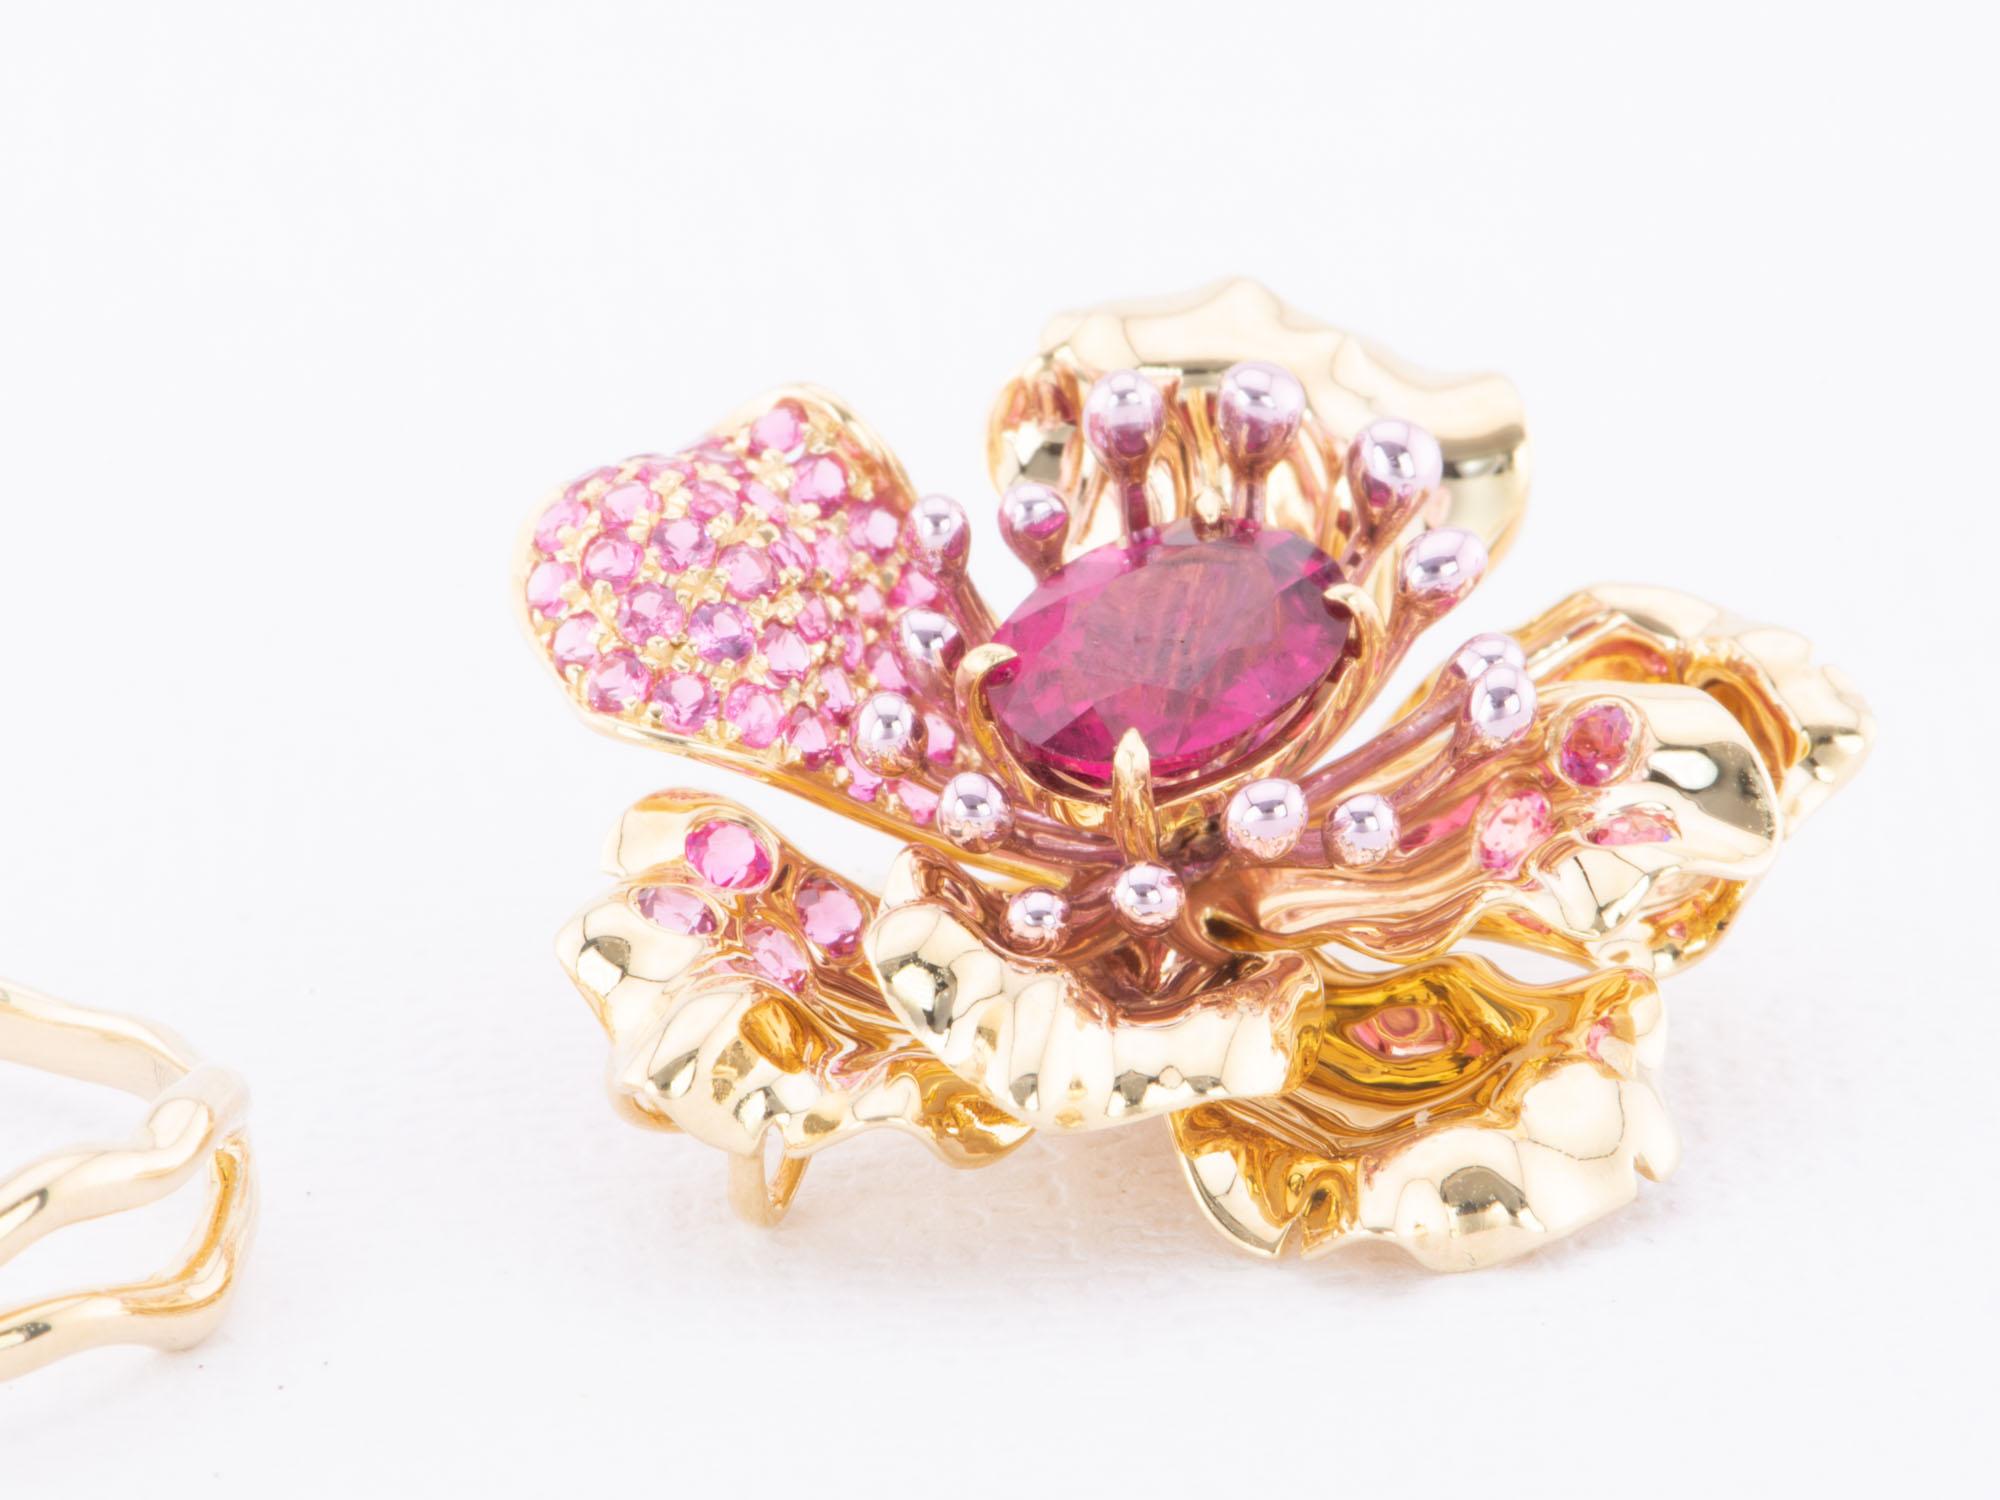 Art Jewelry Rubellite Tourmaline Center Flower Ring / Pendant 18K Gold R6641 For Sale 4